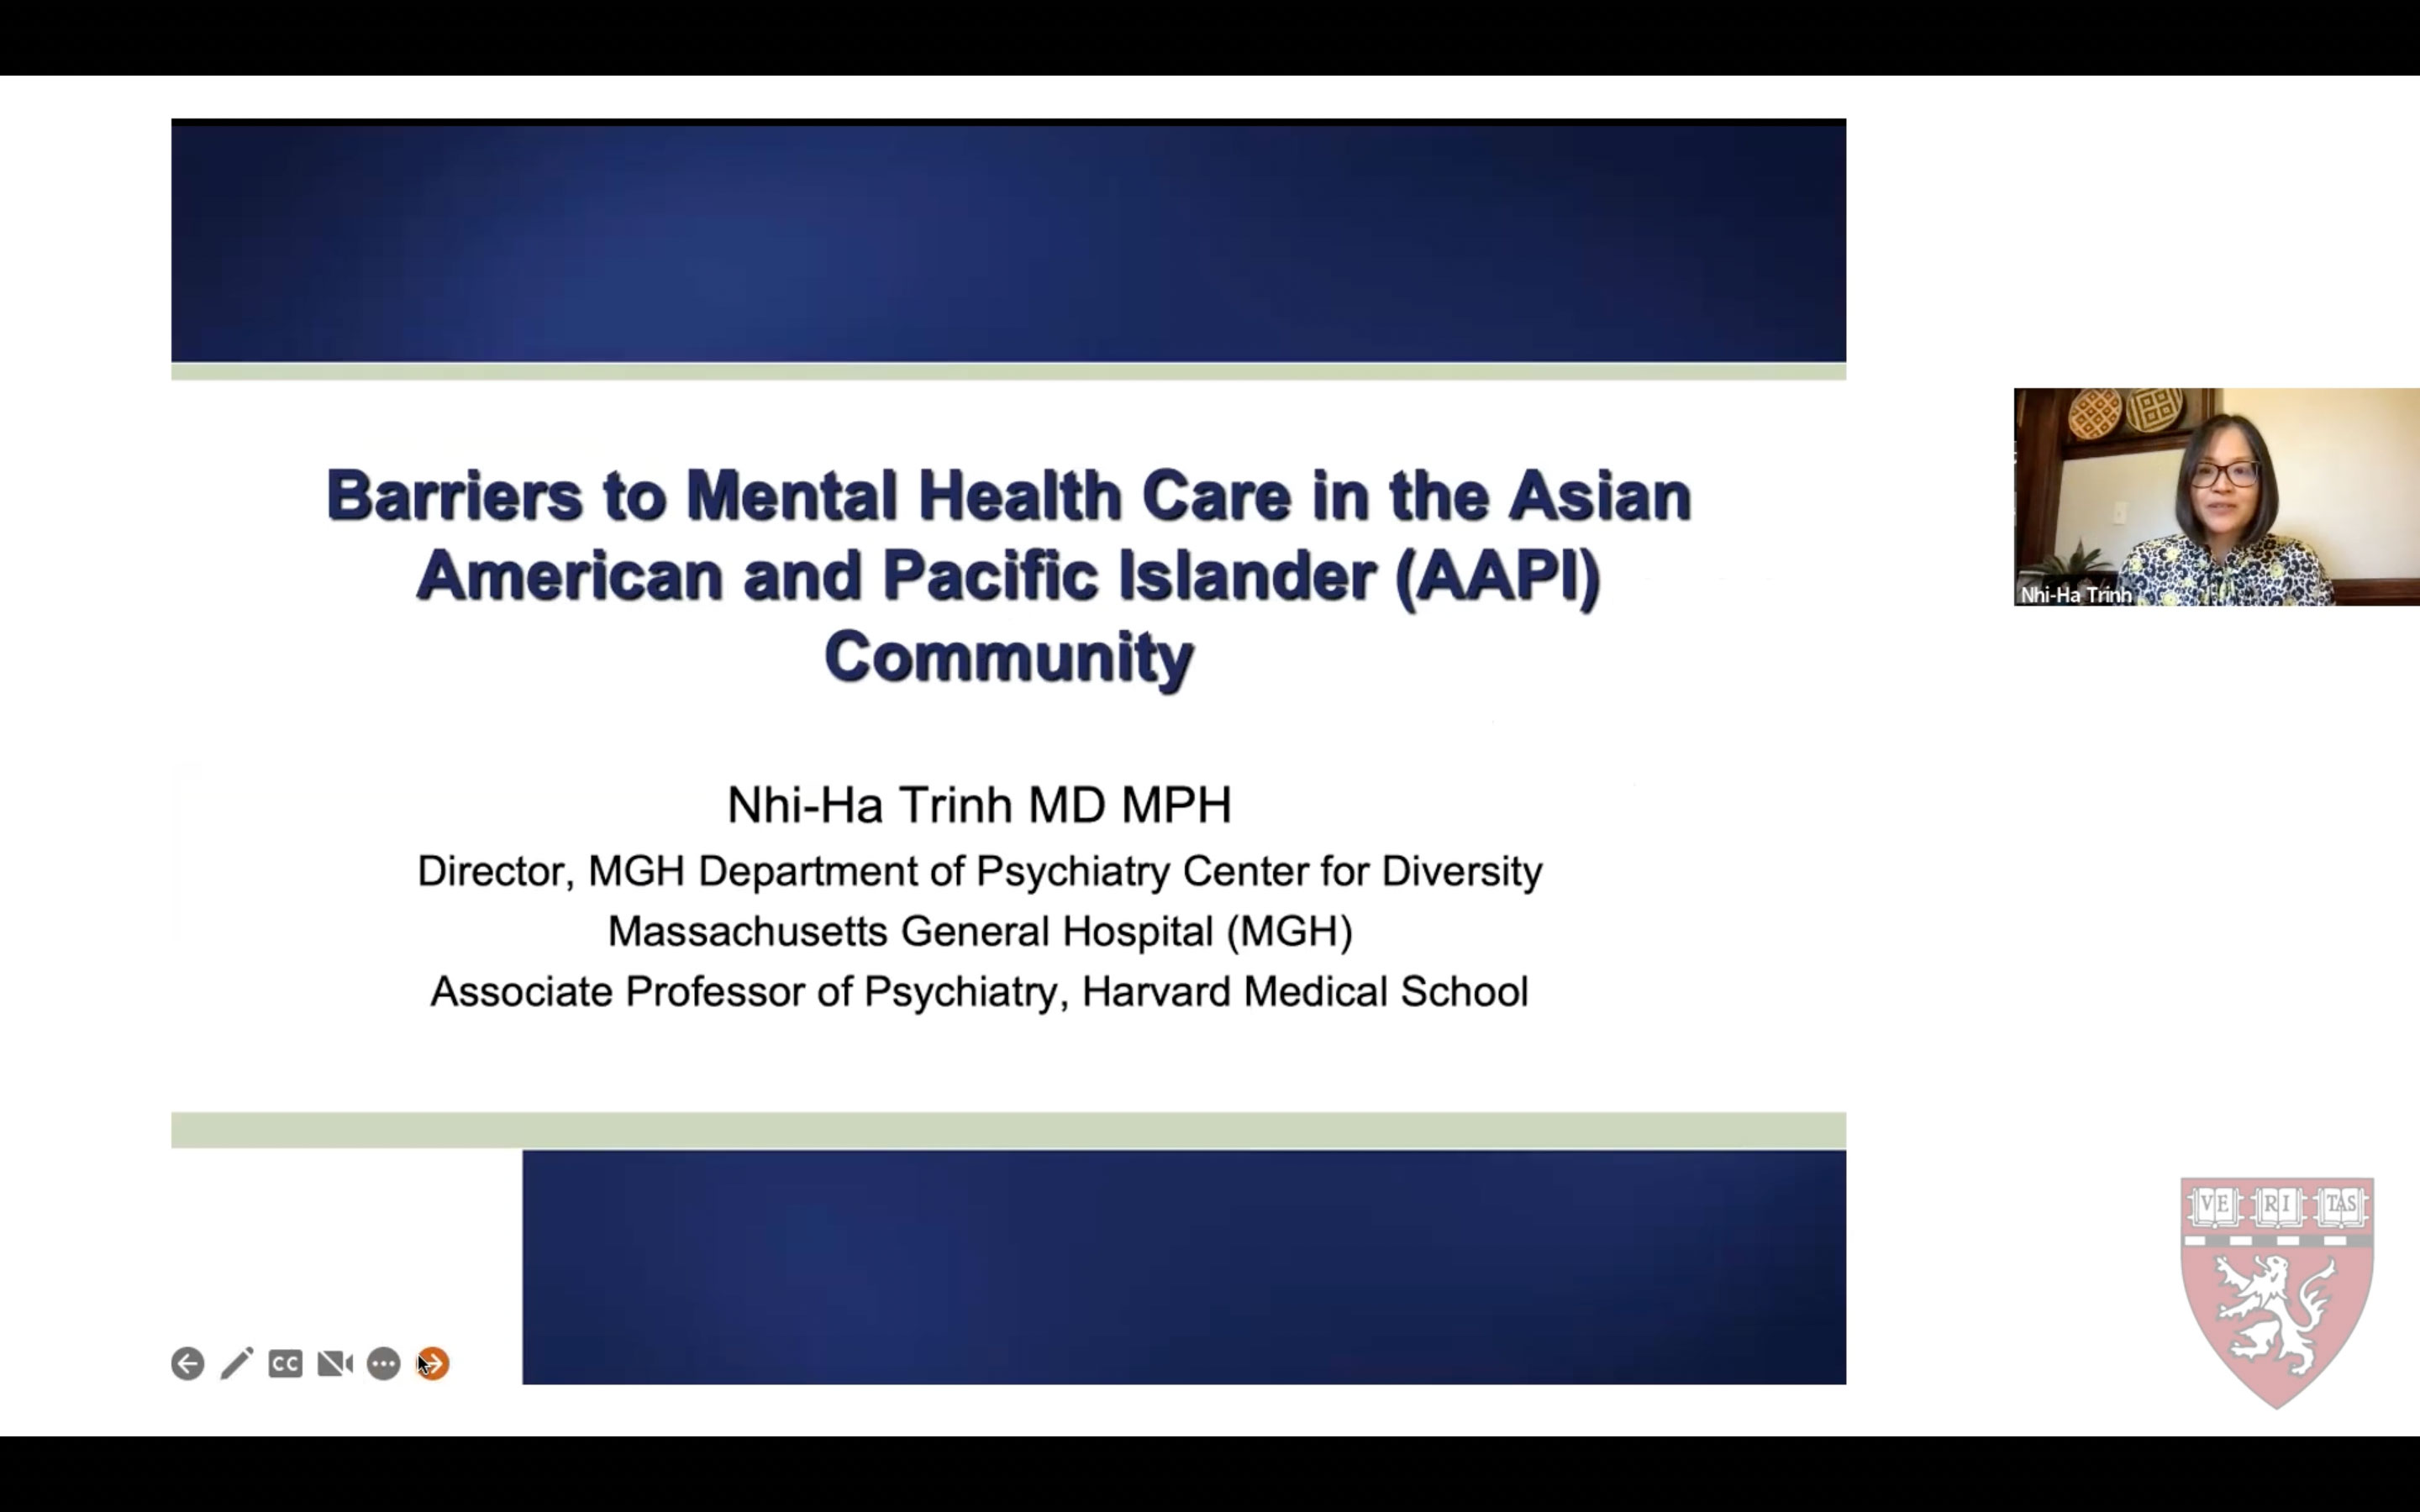 Healthcare disparities in the Asian-American community.